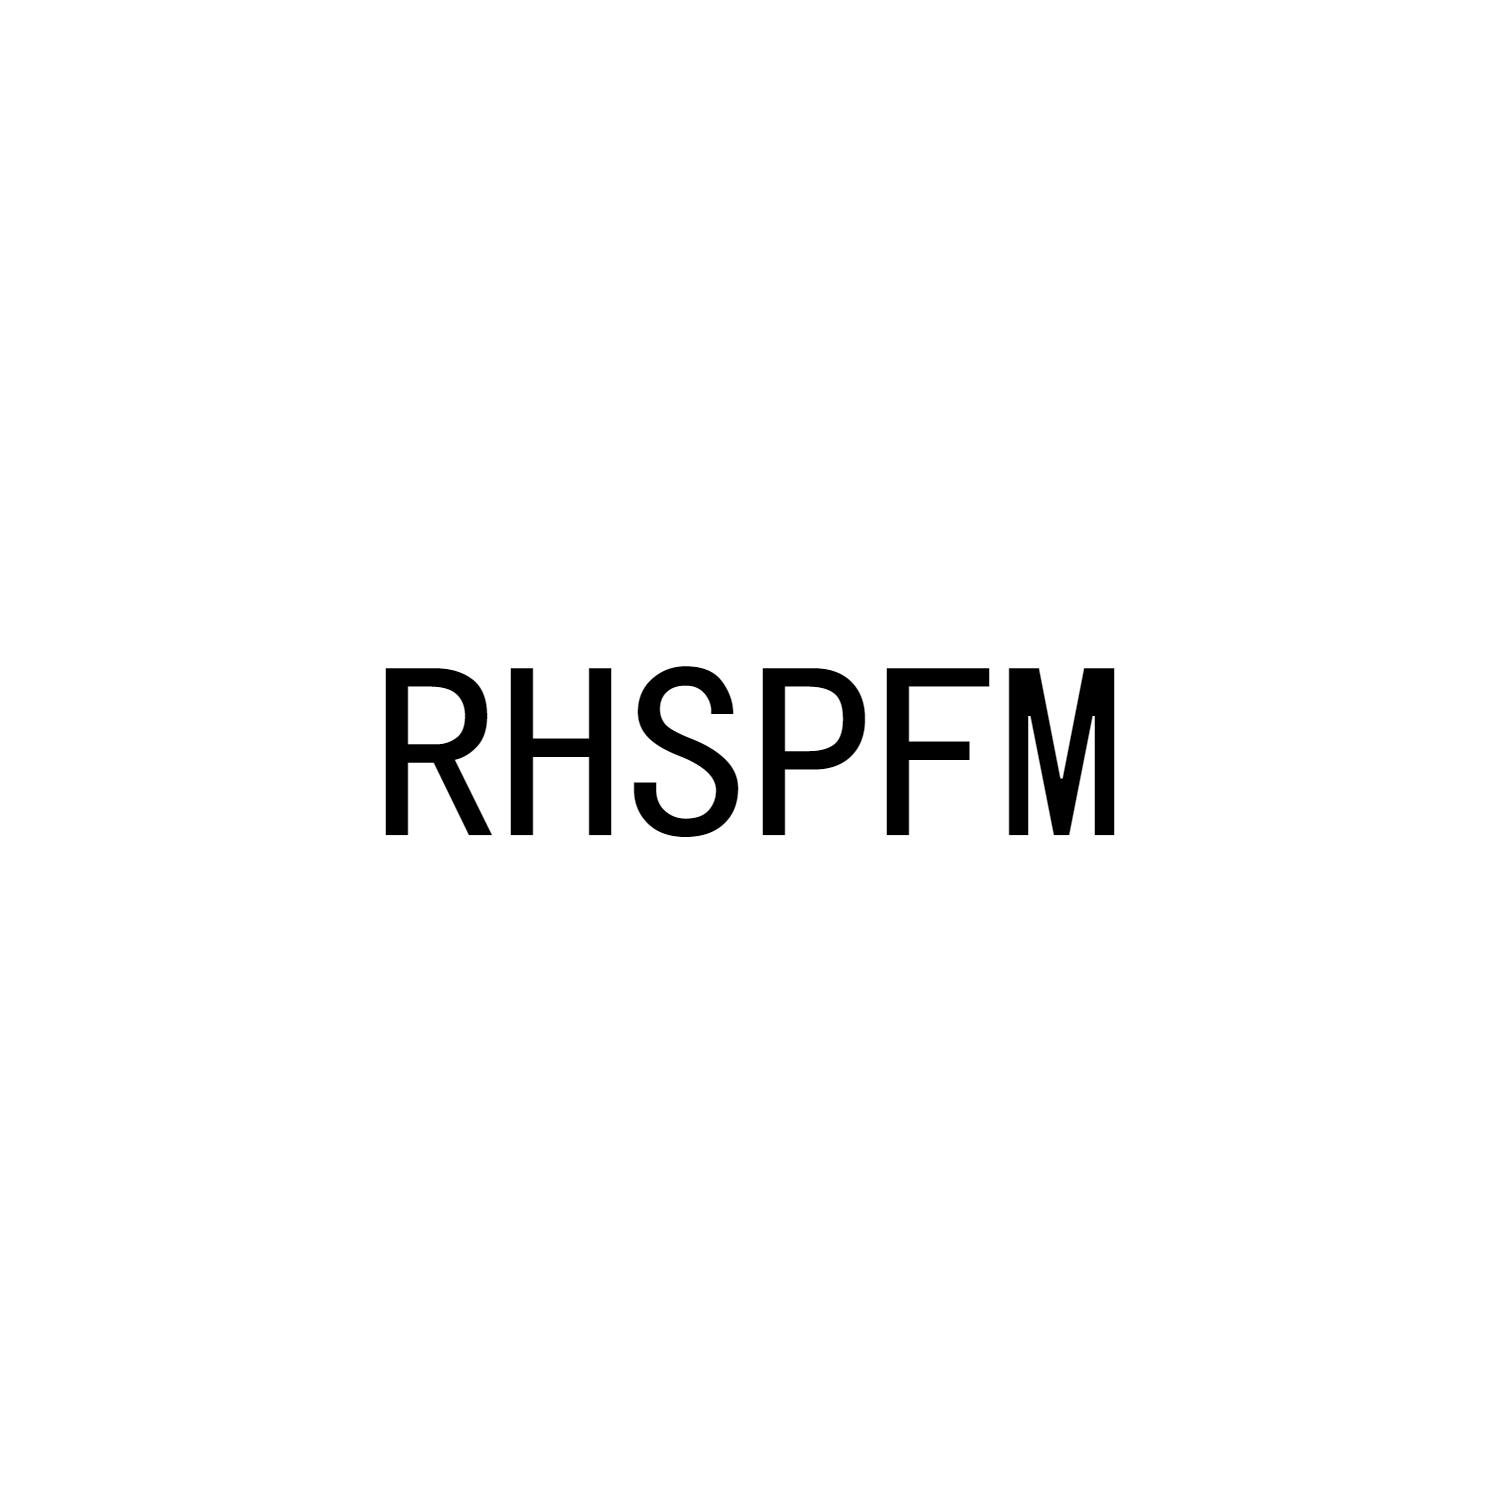 RHSPFM